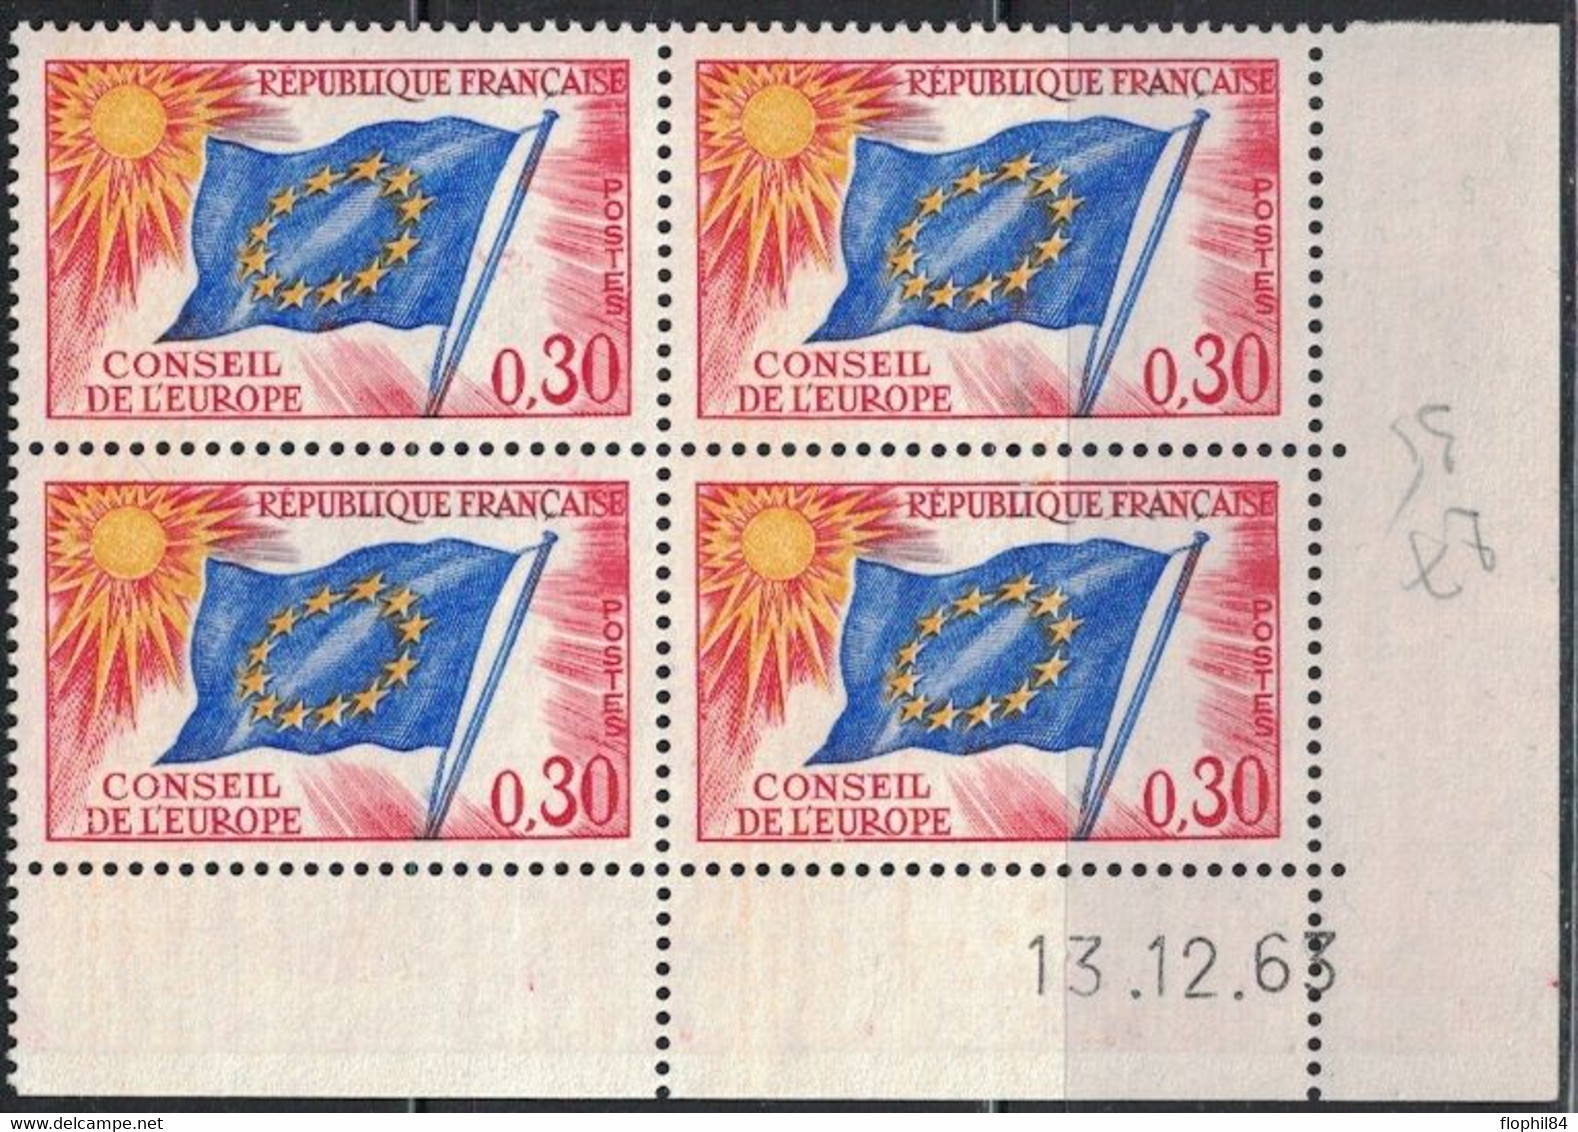 COIN DATE - SERVICE N°30 - 0f30 - CONSEIL DE L'EUROPE - 13-12-1963 - Cote 5€. - Officials